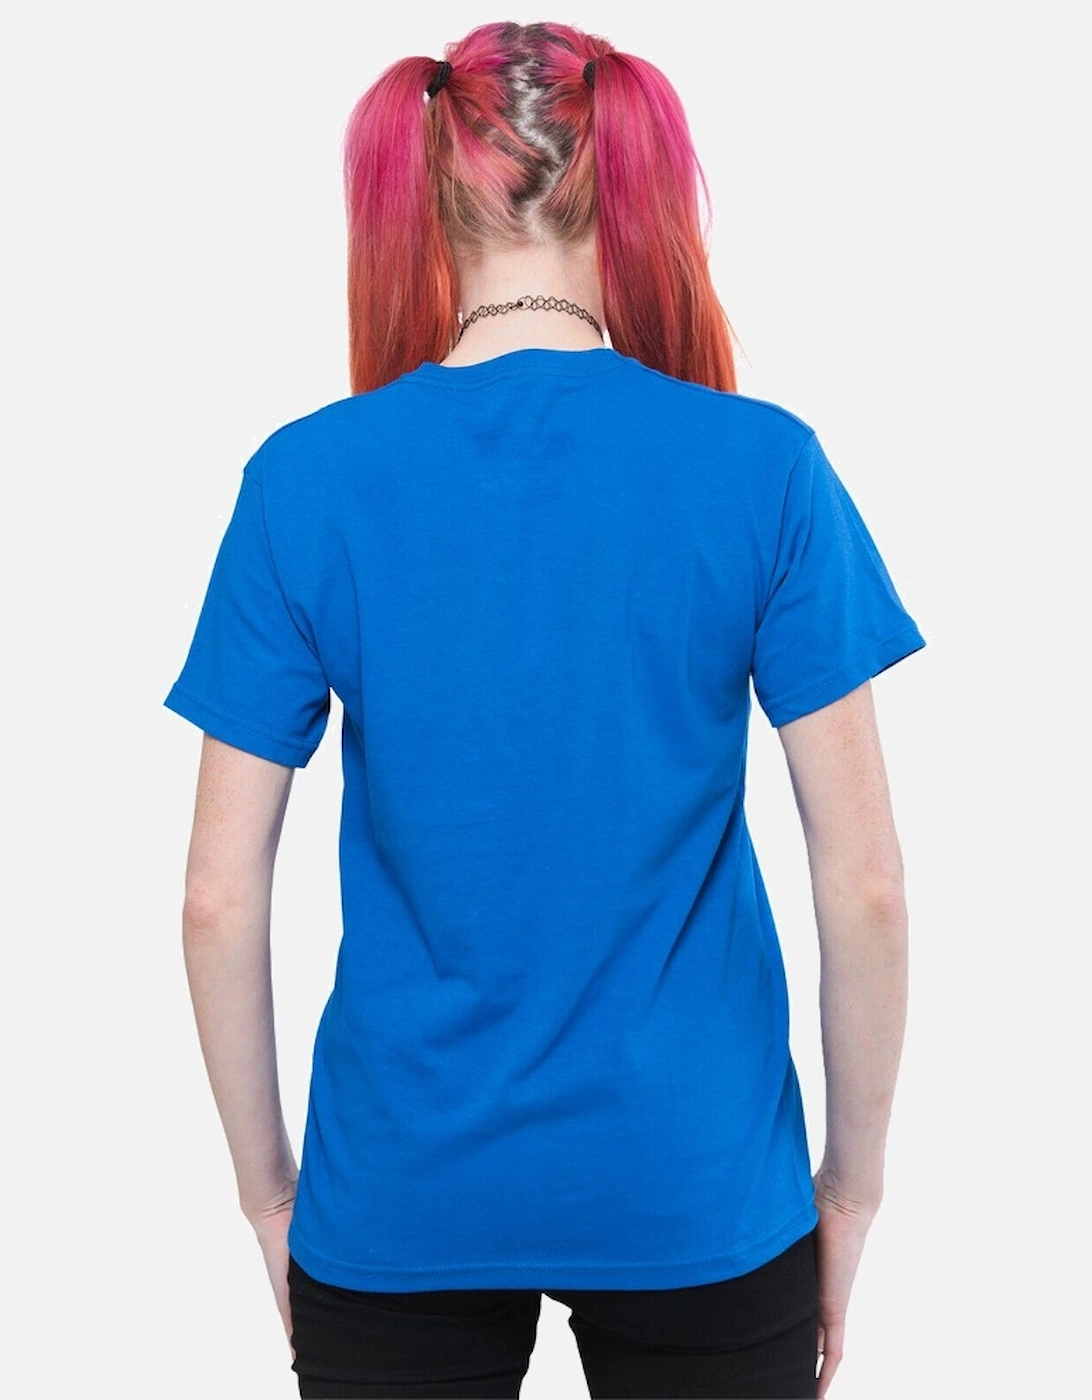 Unisex Adult Pretty Vacant Coaches T-Shirt